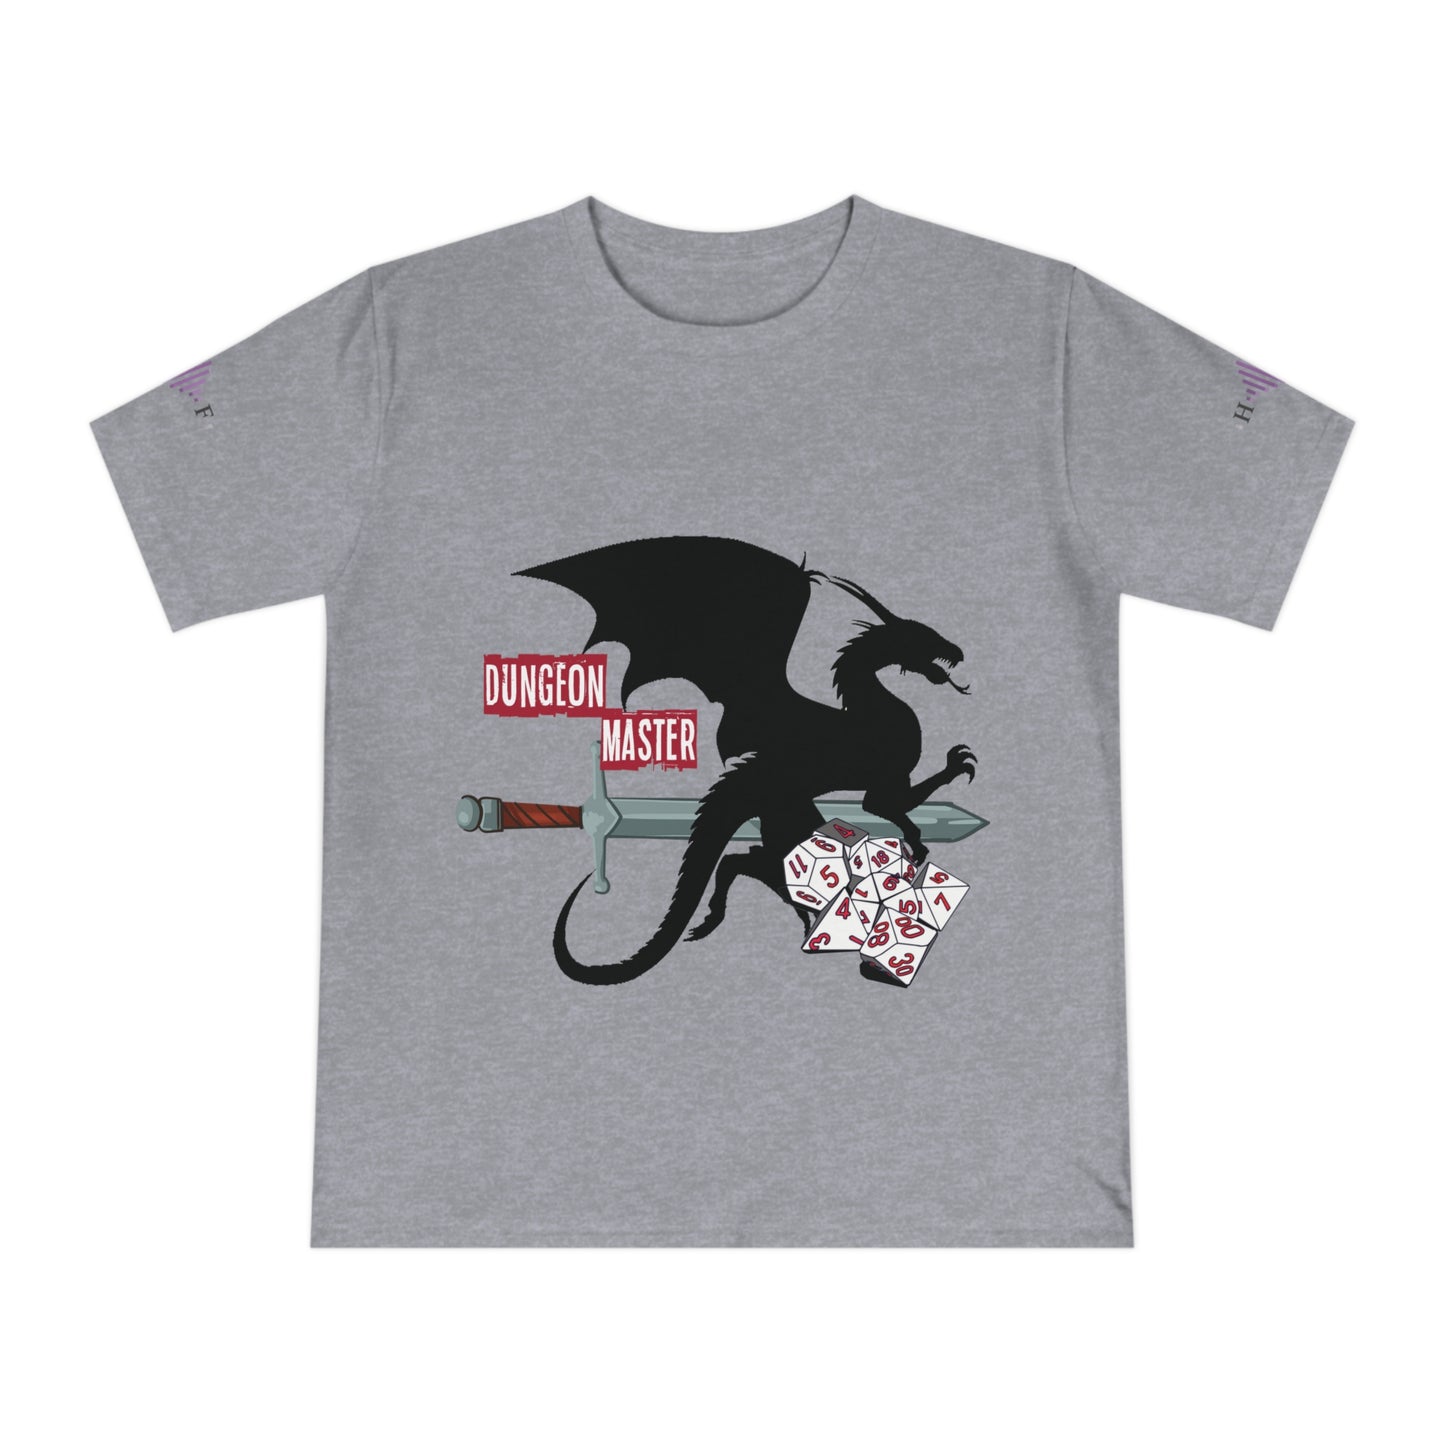 Dungeon Master - Unisex Classic Jersey T-shirt ( DM )